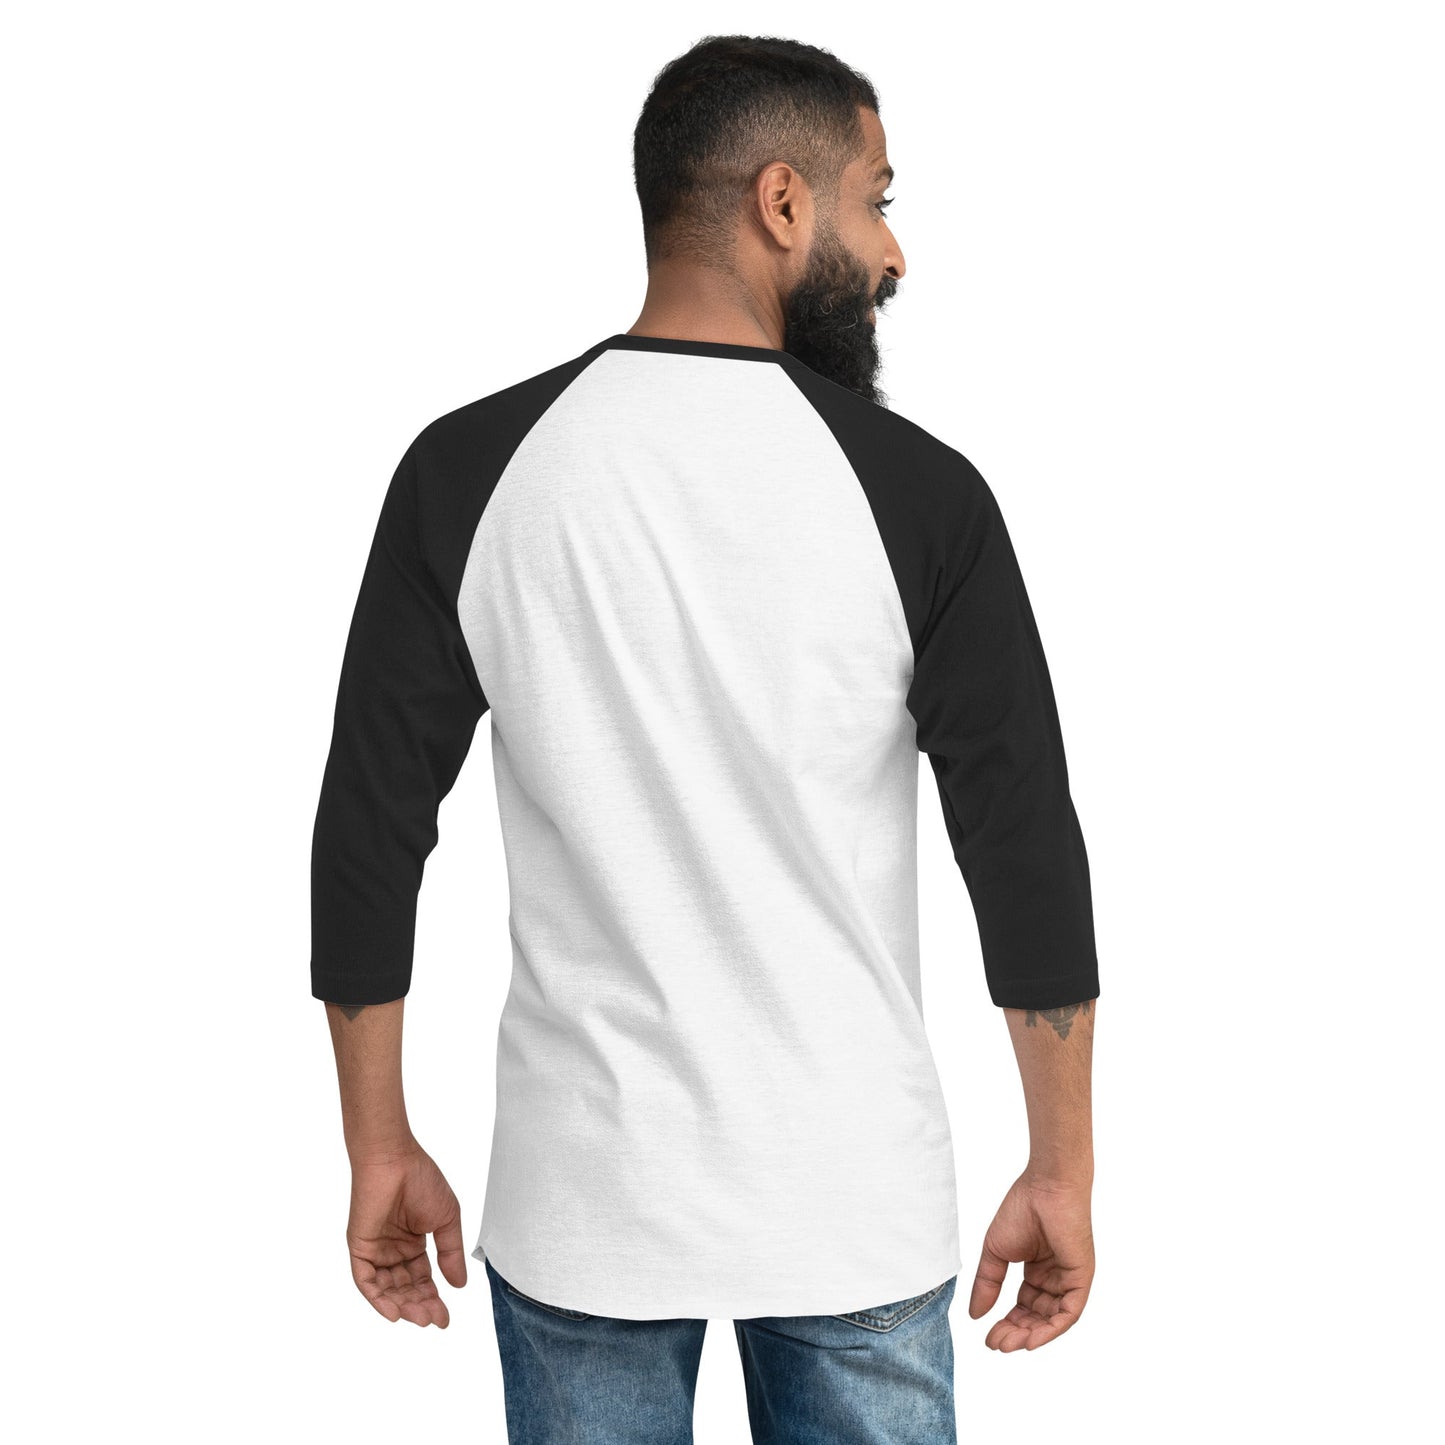 Christian Definition - Black on White - 3/4 sleeve raglan shirt - Creation Awaits